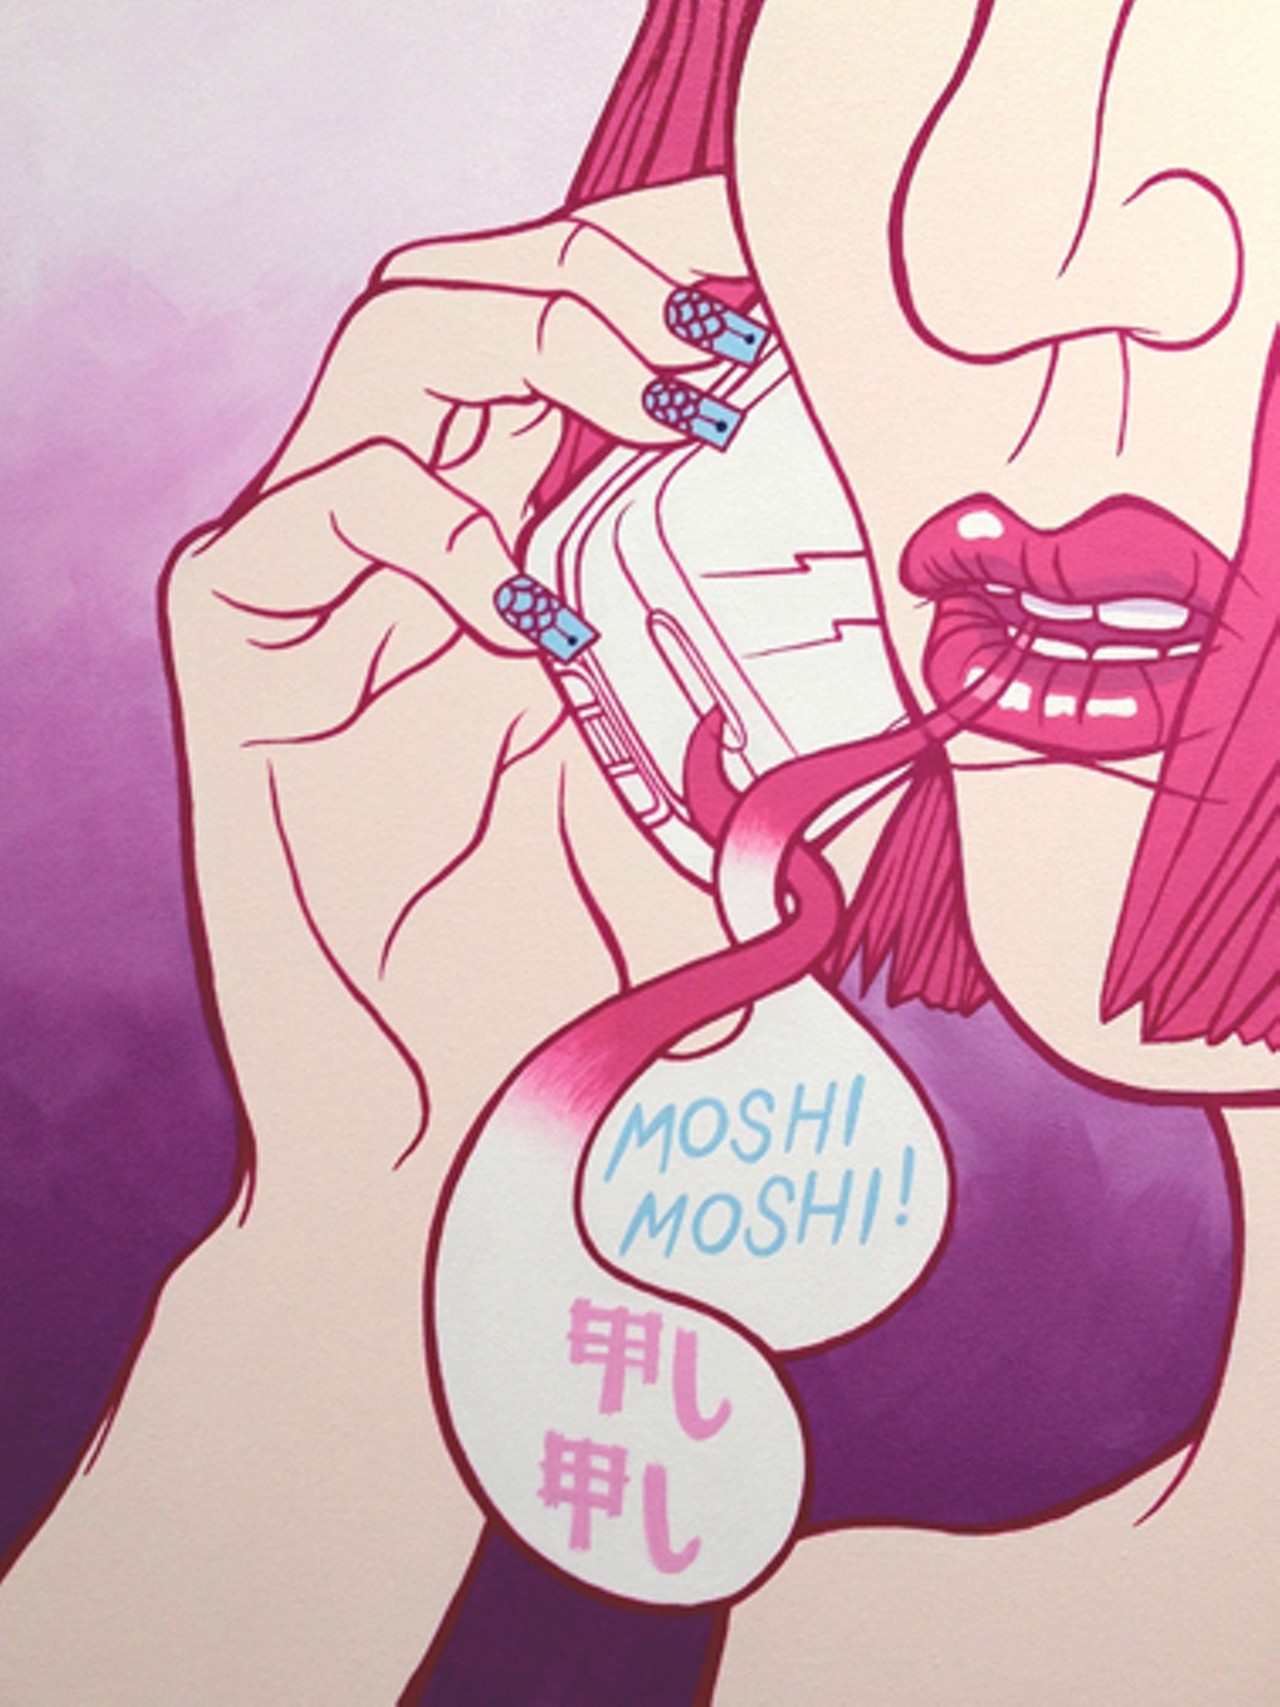 Moshi Moshi1 by Mark Sarmelclick here to visit Mark Sarmel's studio 